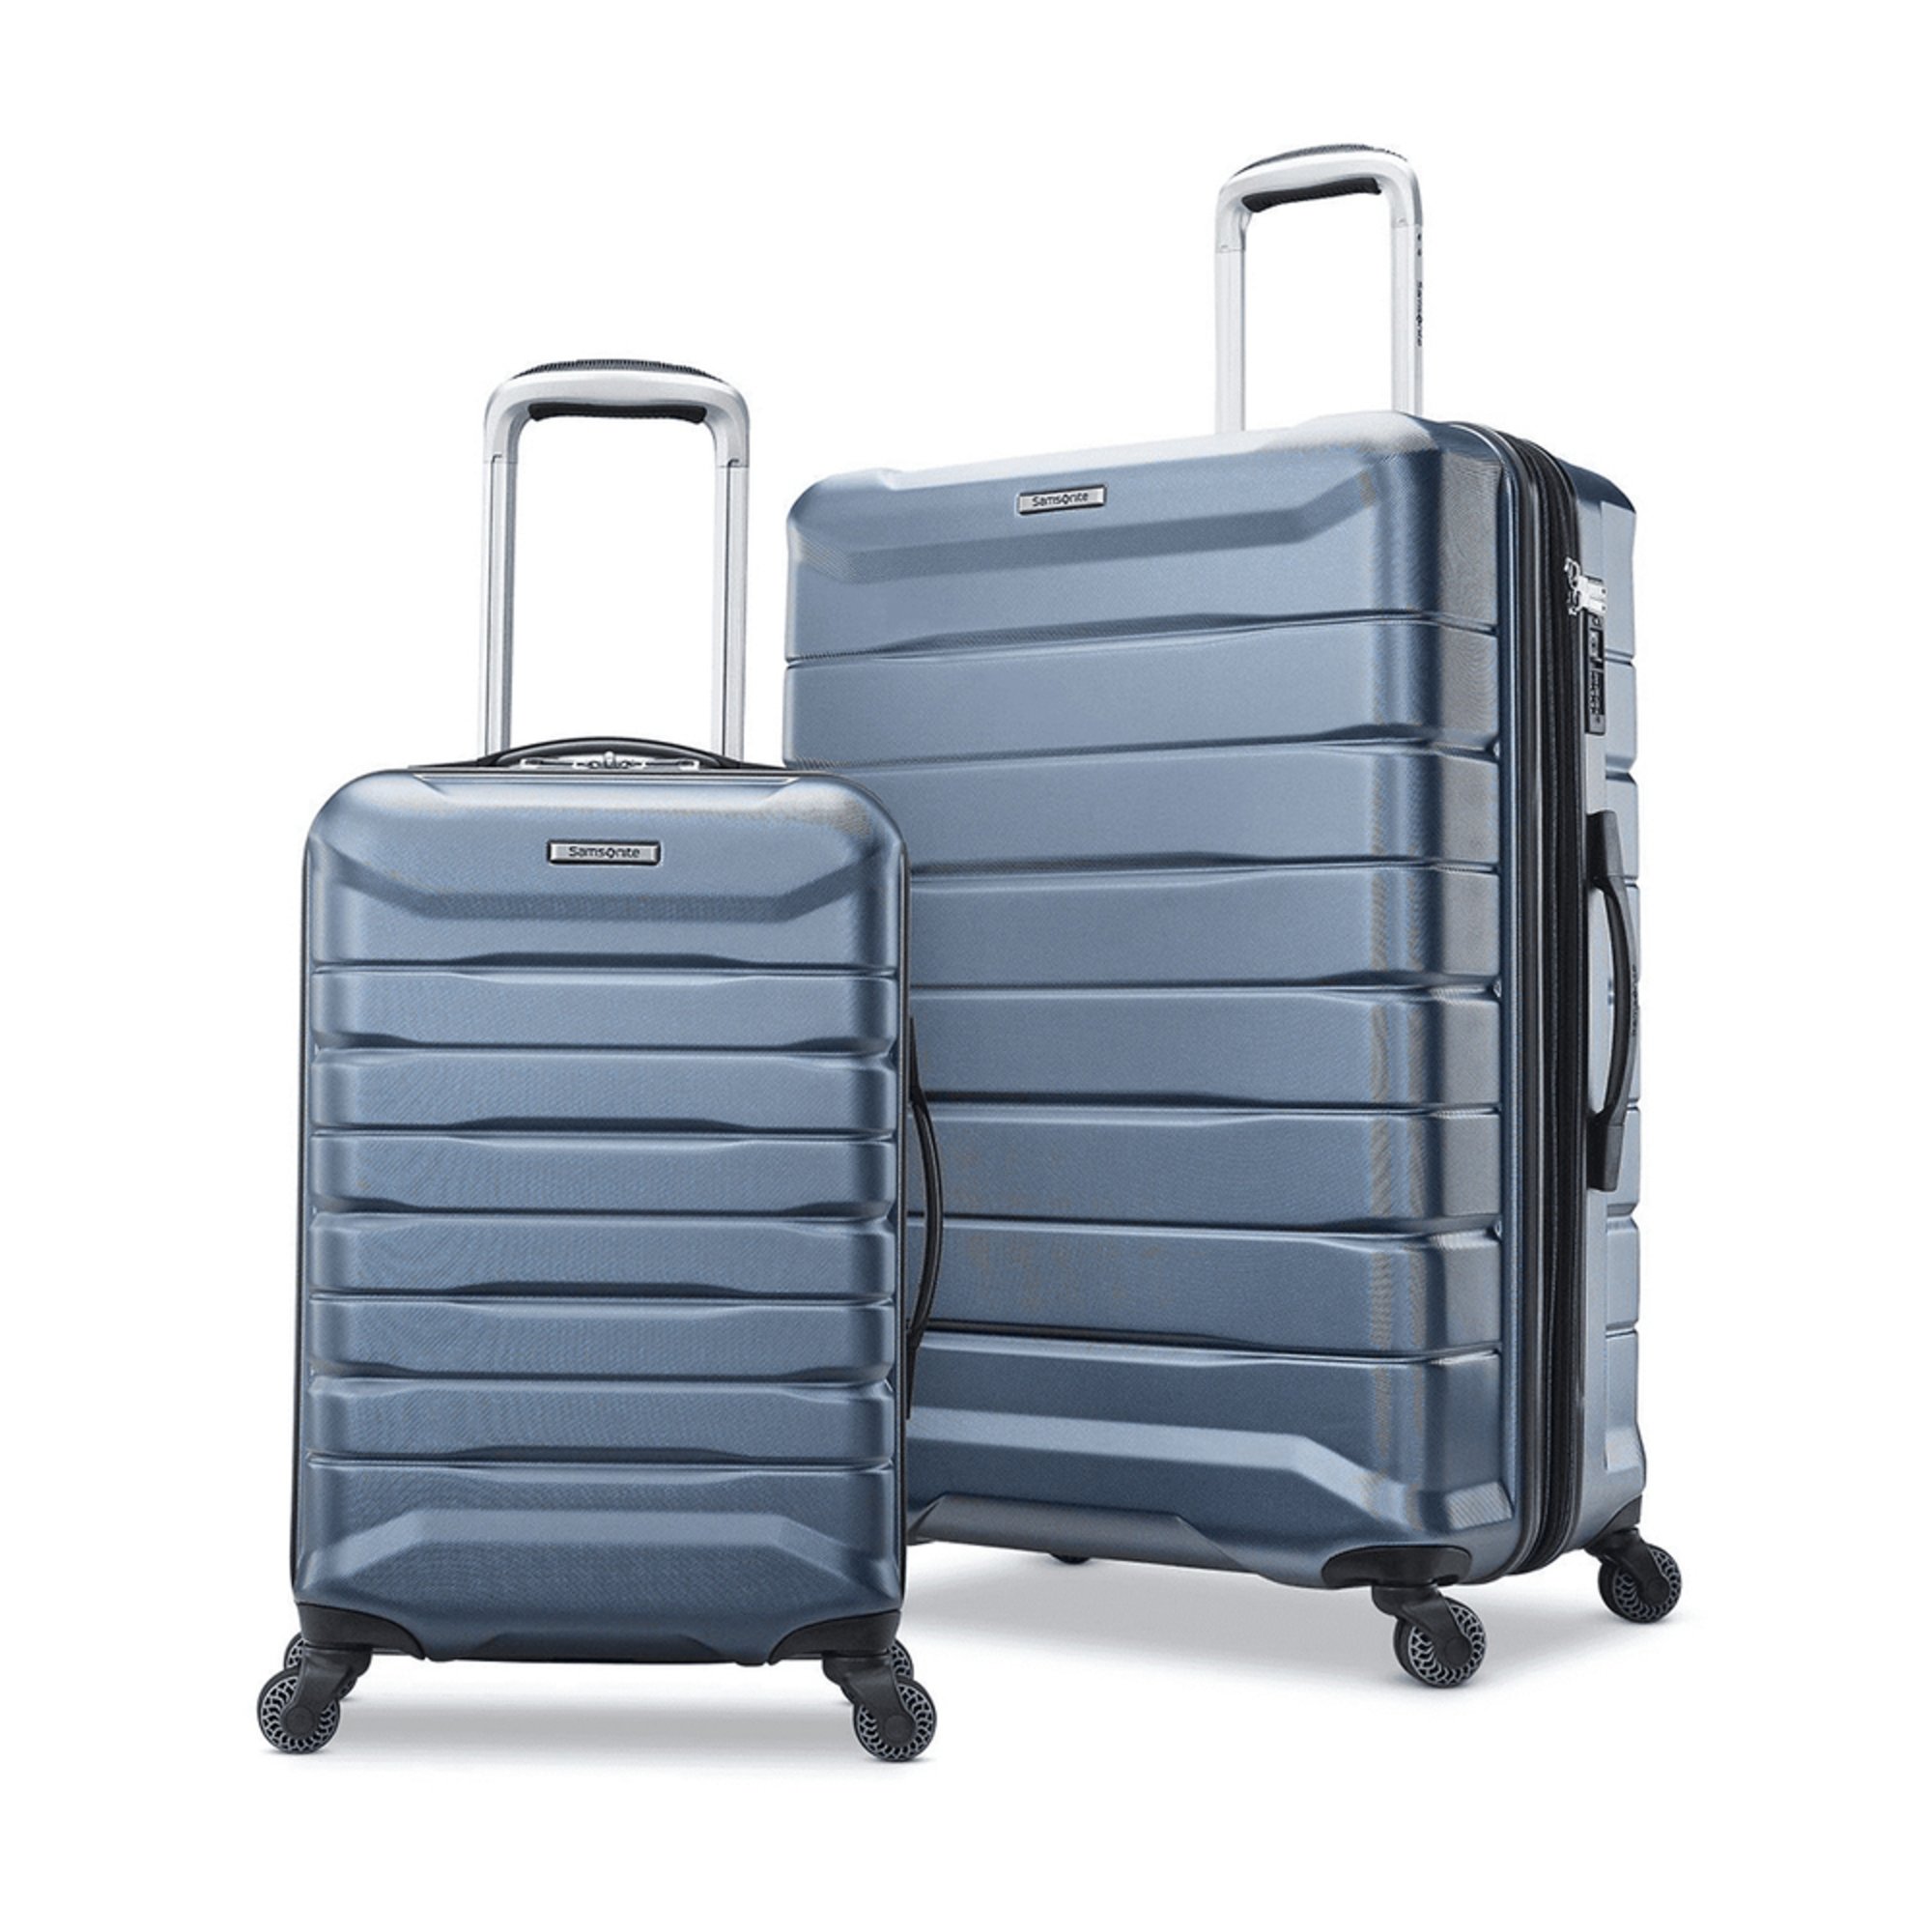 Samsonite Astute Nxt 2pc Hardside Luggage Set | Luggage & Backpacks ...